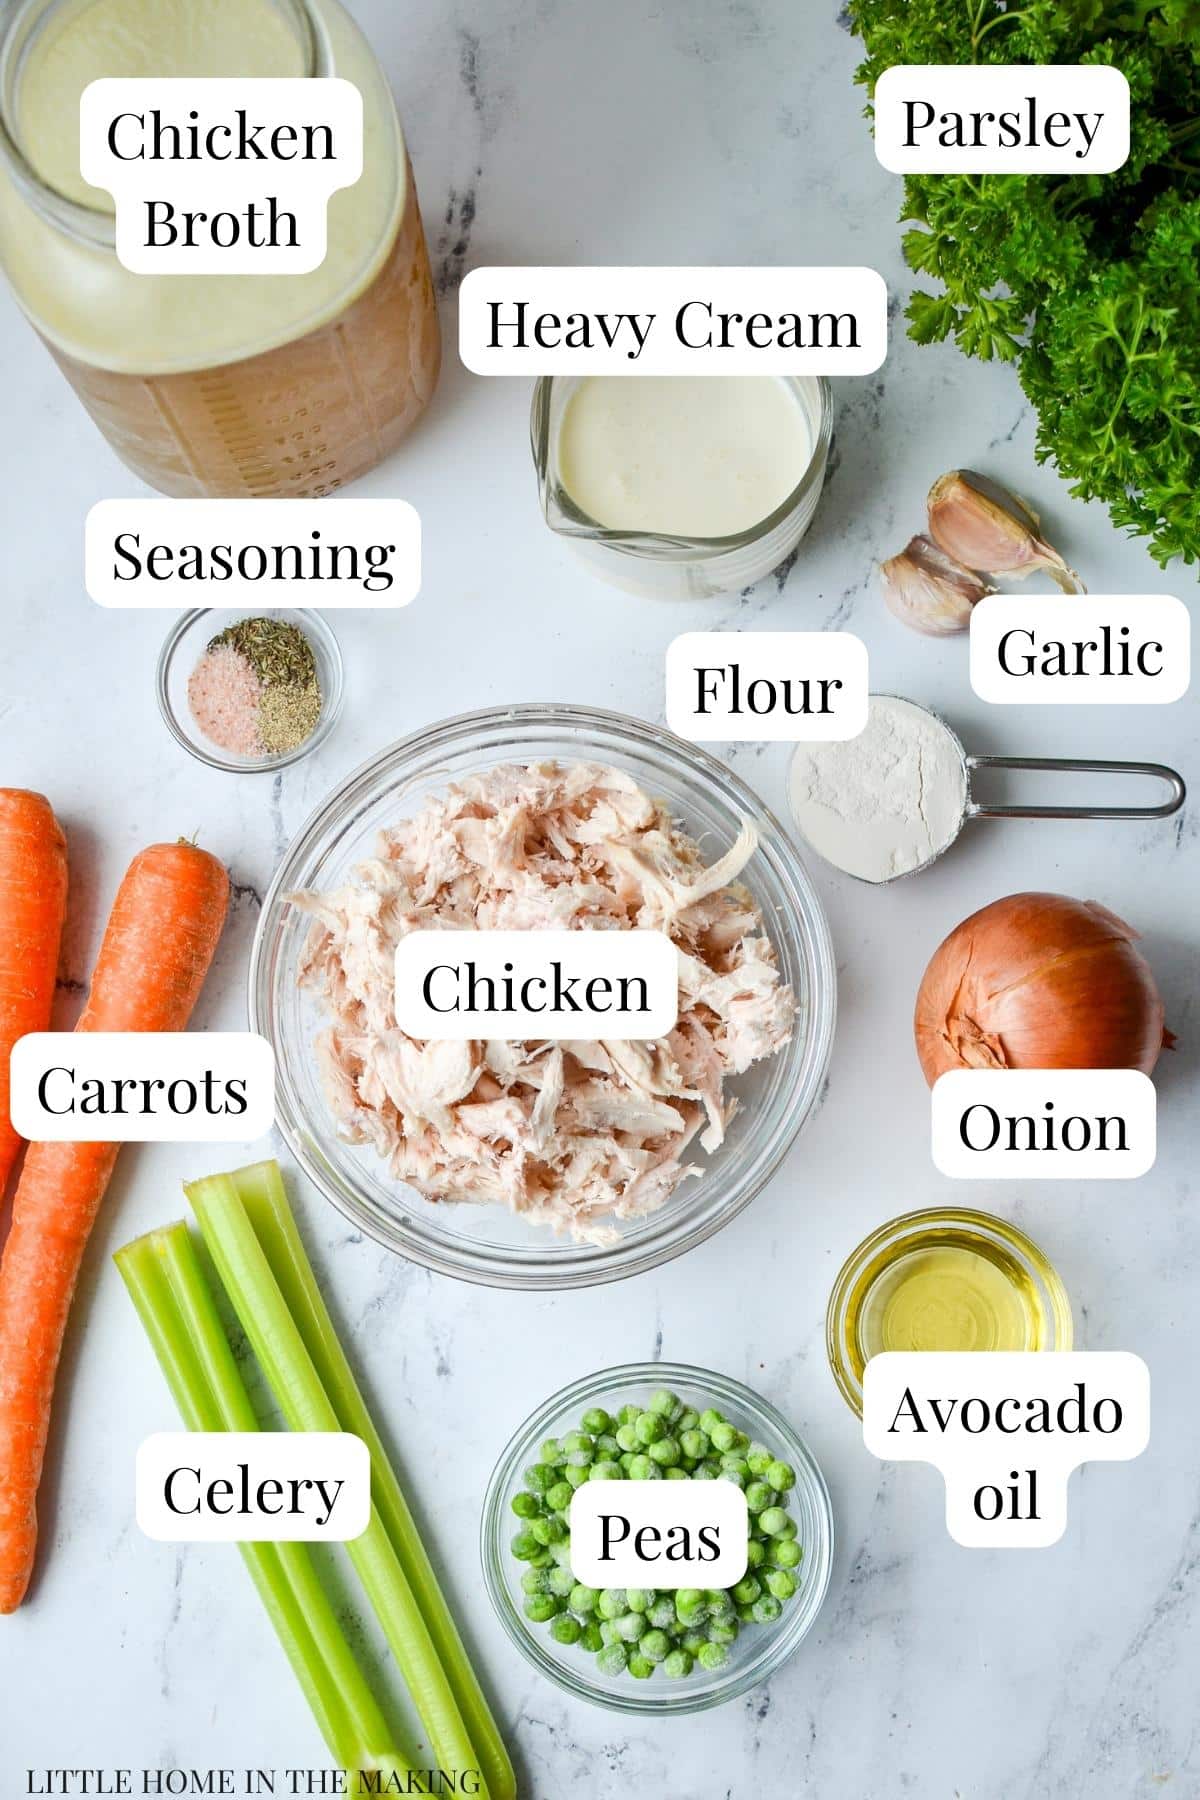 The ingredients needed to make chicken stew: cooked chicken, broth, aromatics, etc.